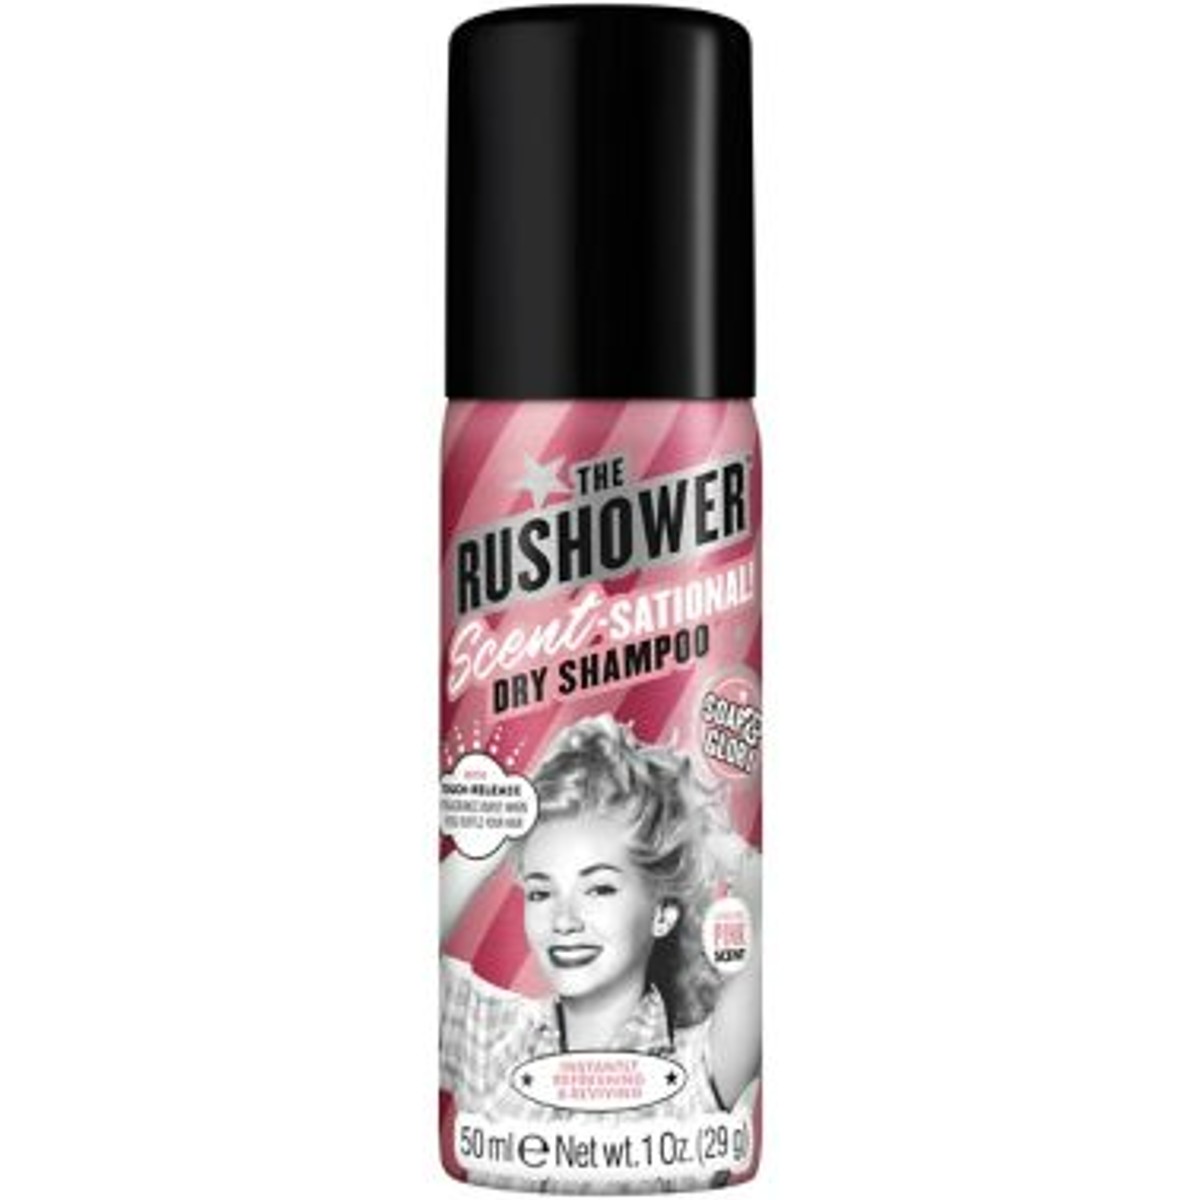 Rushower Dry Shampoo Travel Size Mini